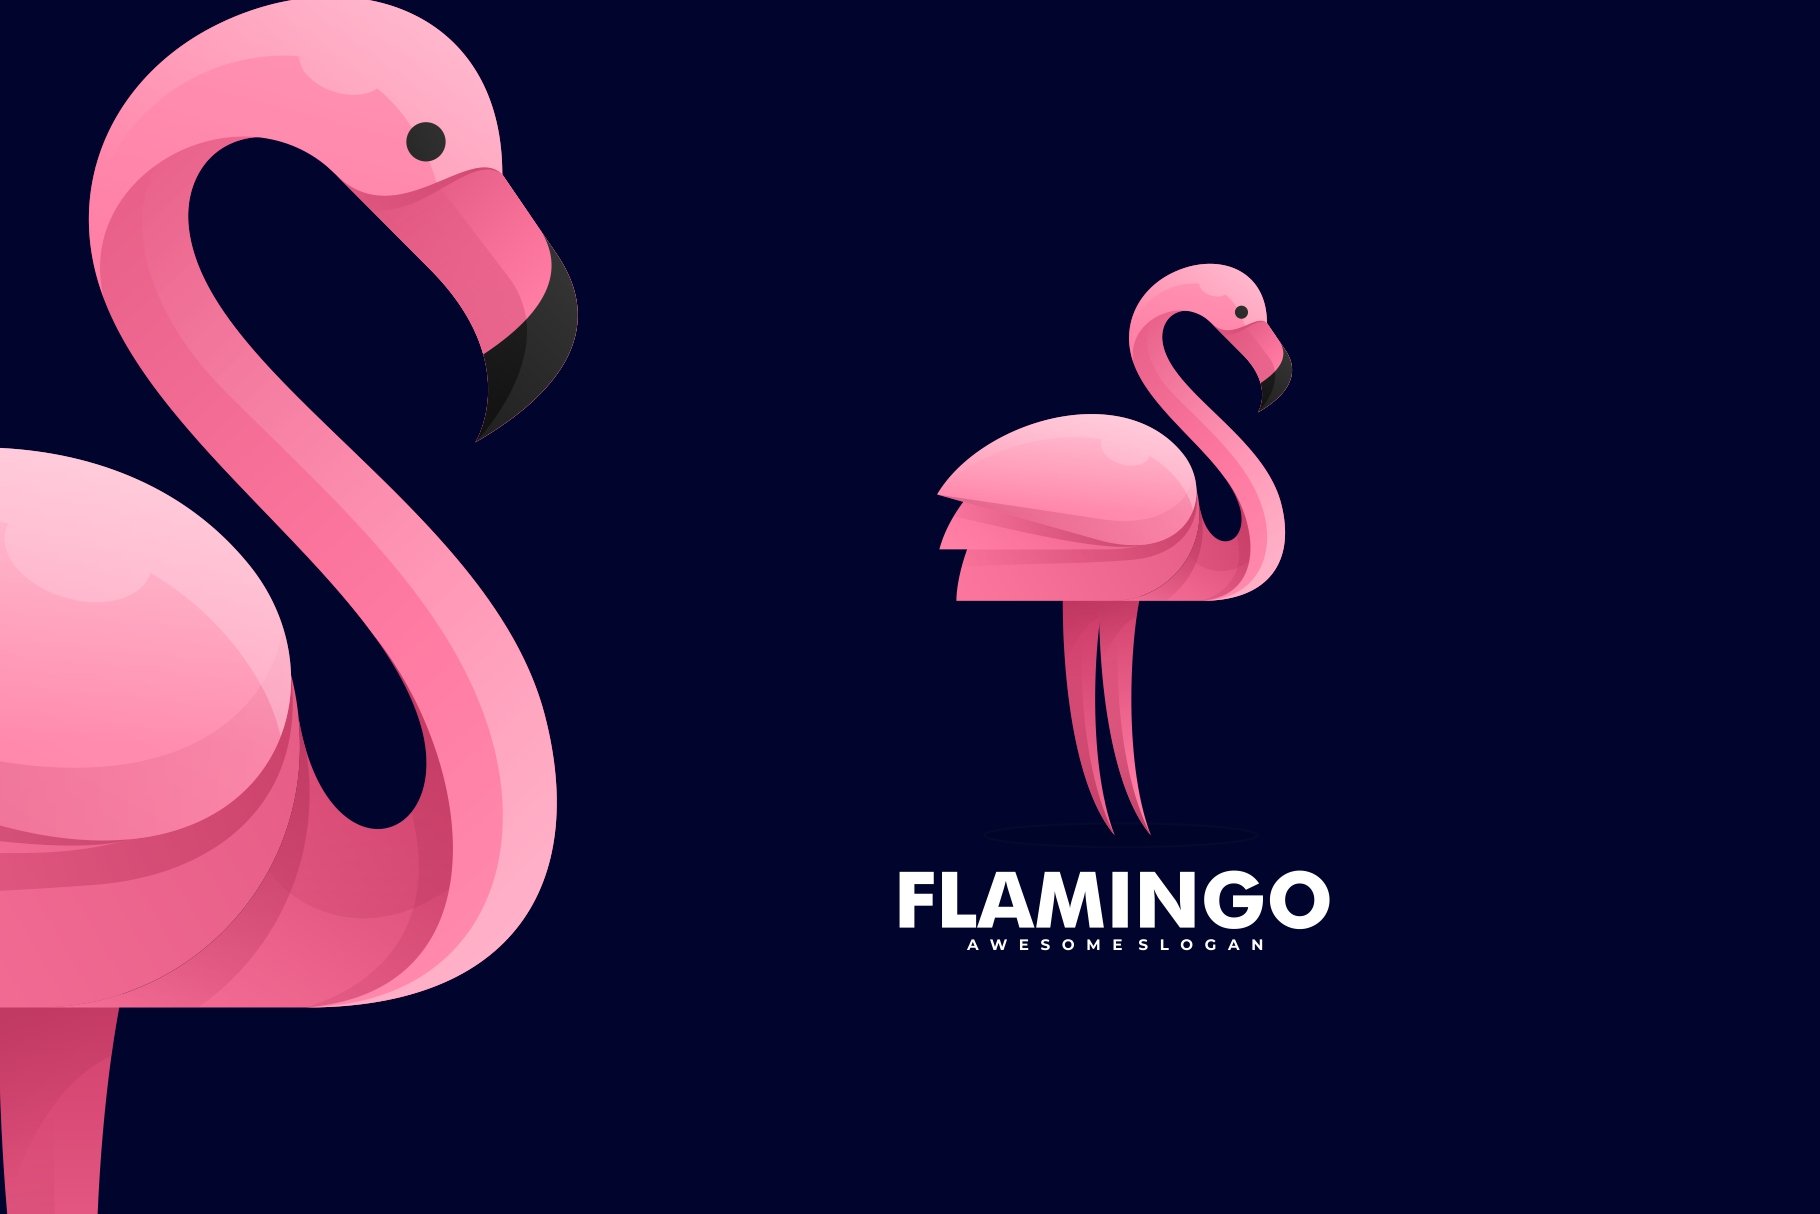 Flamingo Gradient Logo cover image.